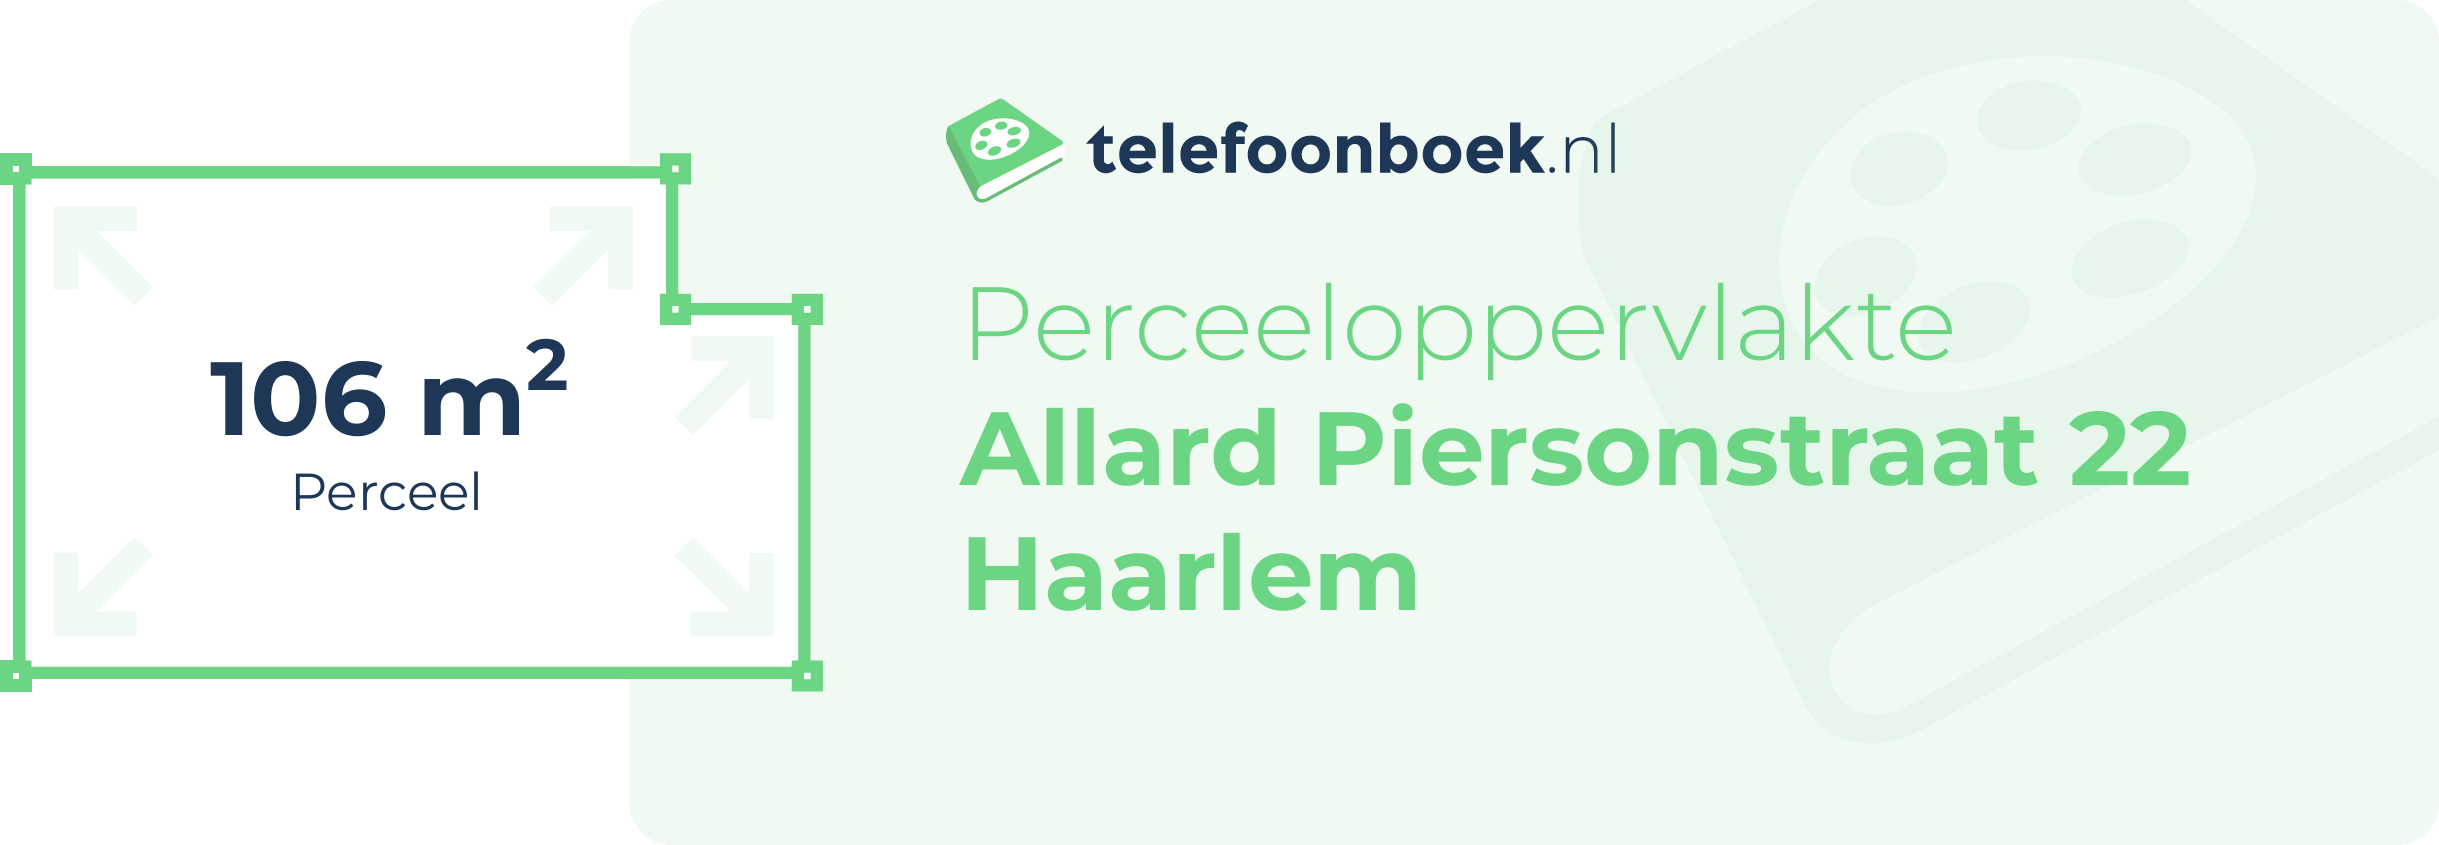 Perceeloppervlakte Allard Piersonstraat 22 Haarlem